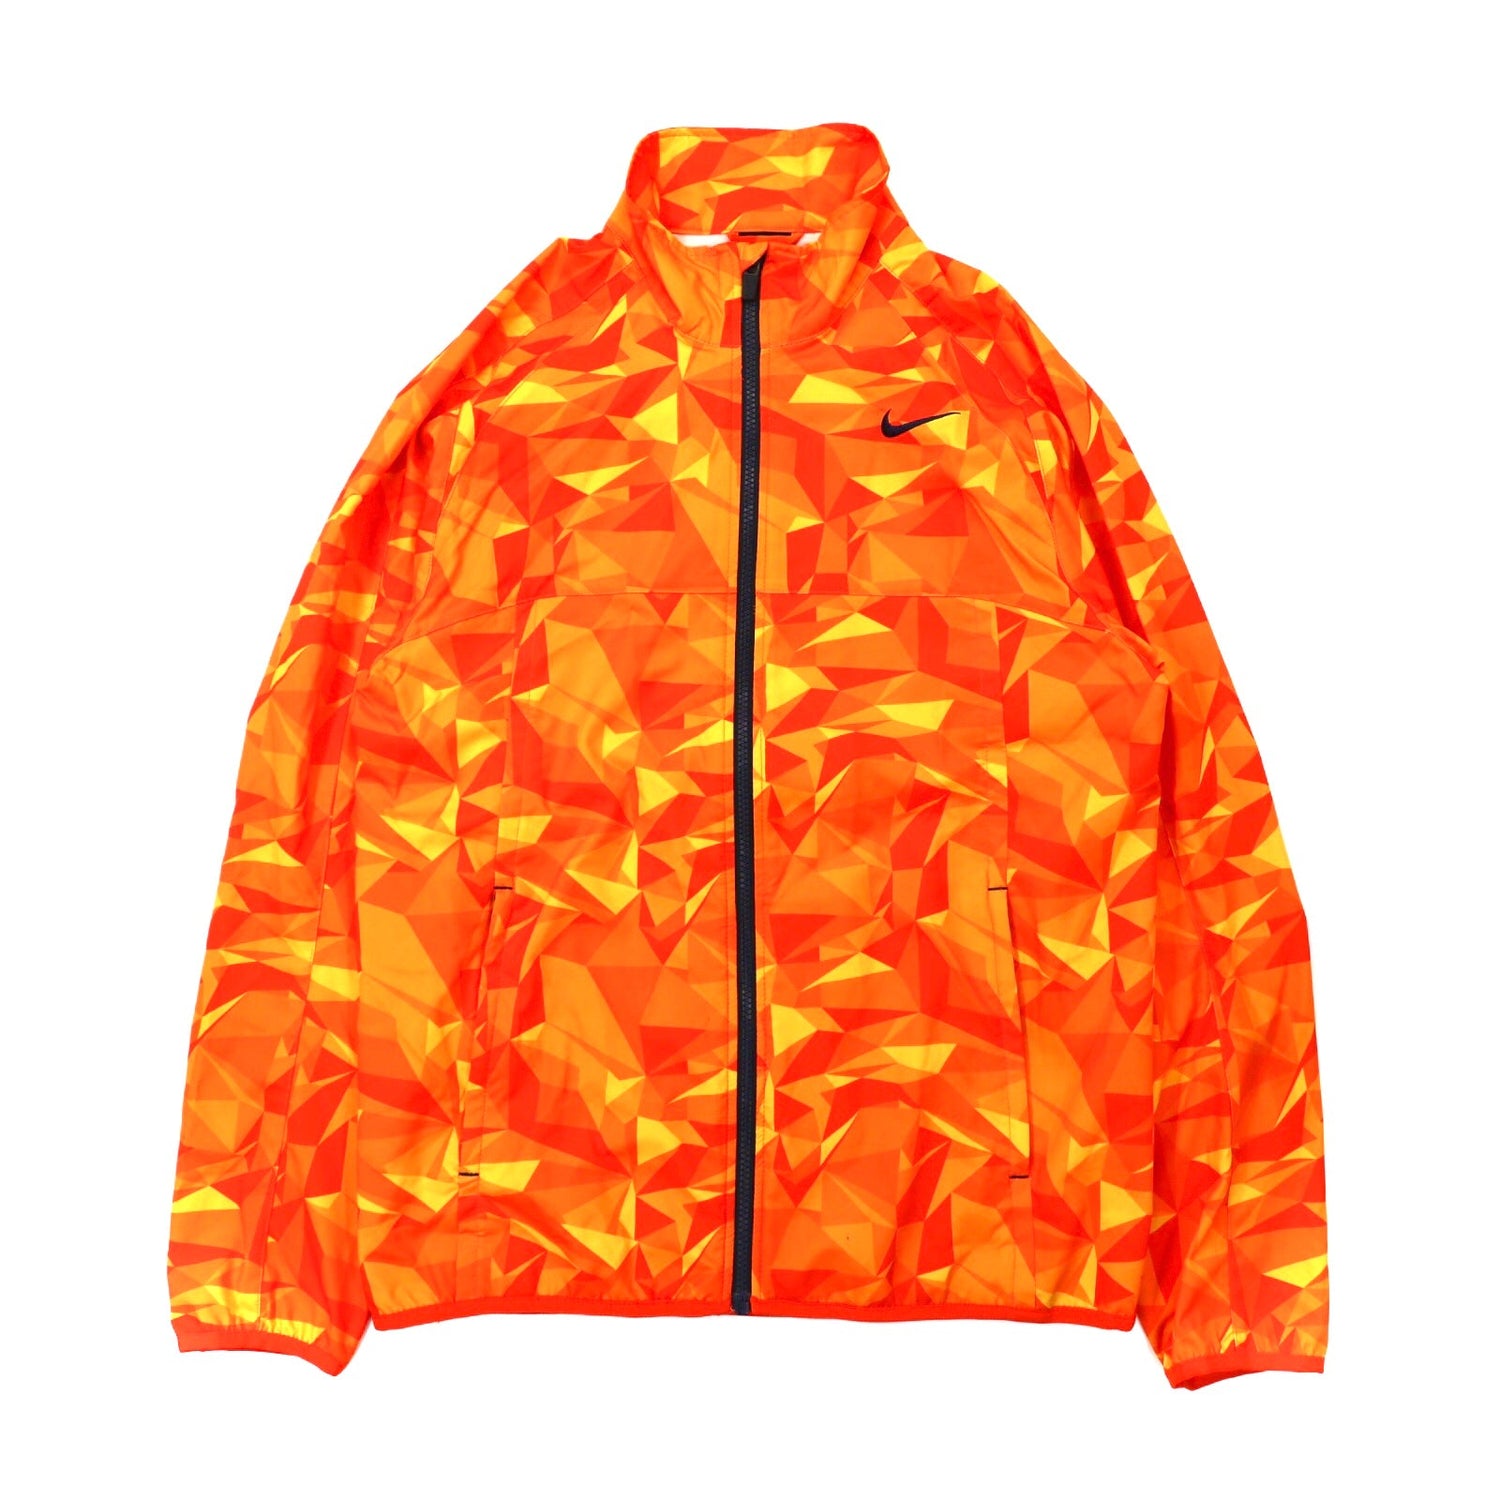 Nike Track Jacket M Orange Polyester Patterned